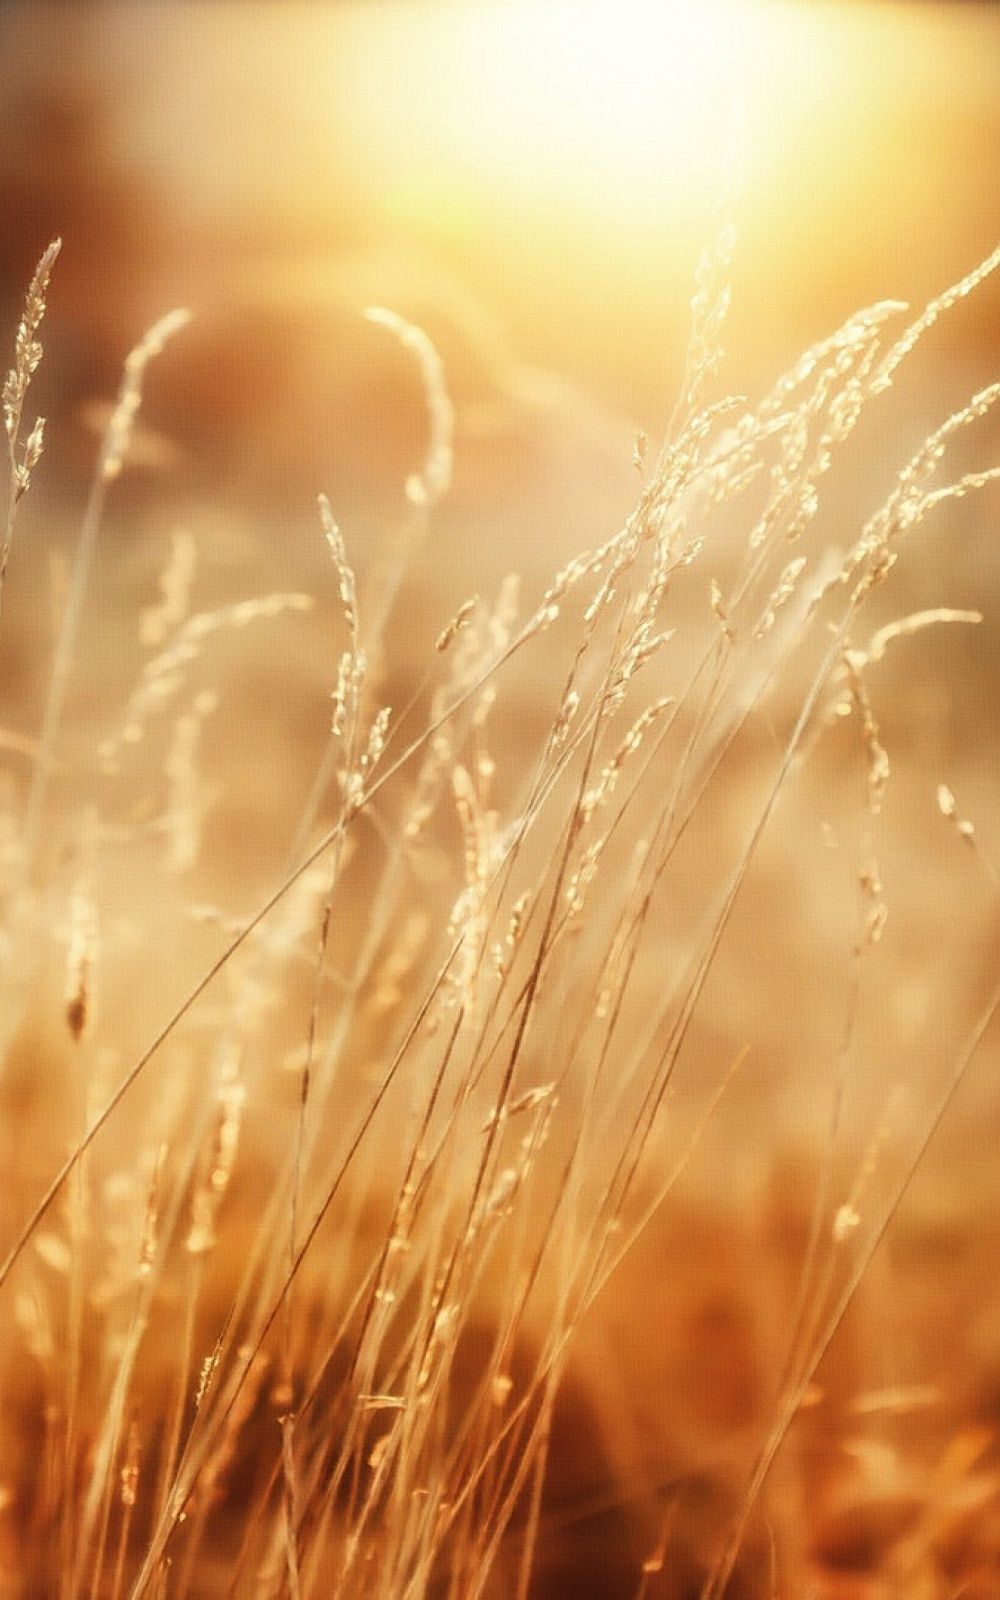 A field of tall grass in the sunlight. - Sunshine